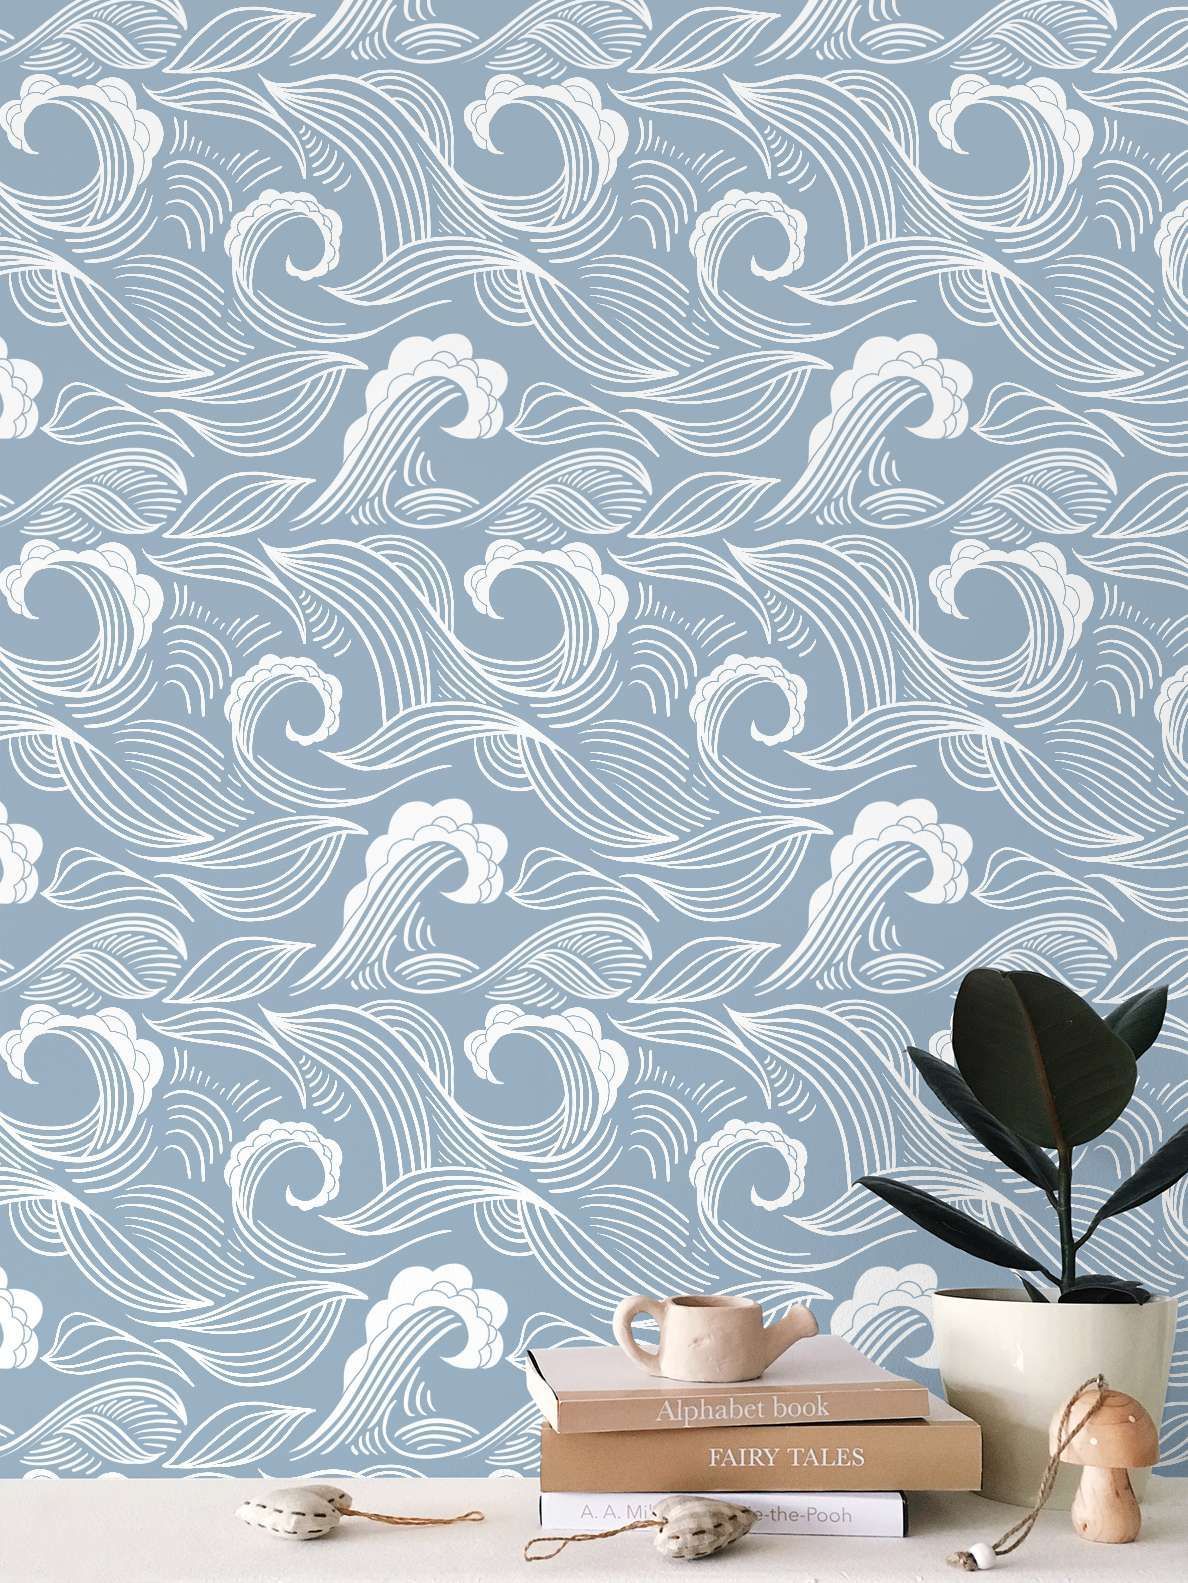 Ocean wave wall paper design